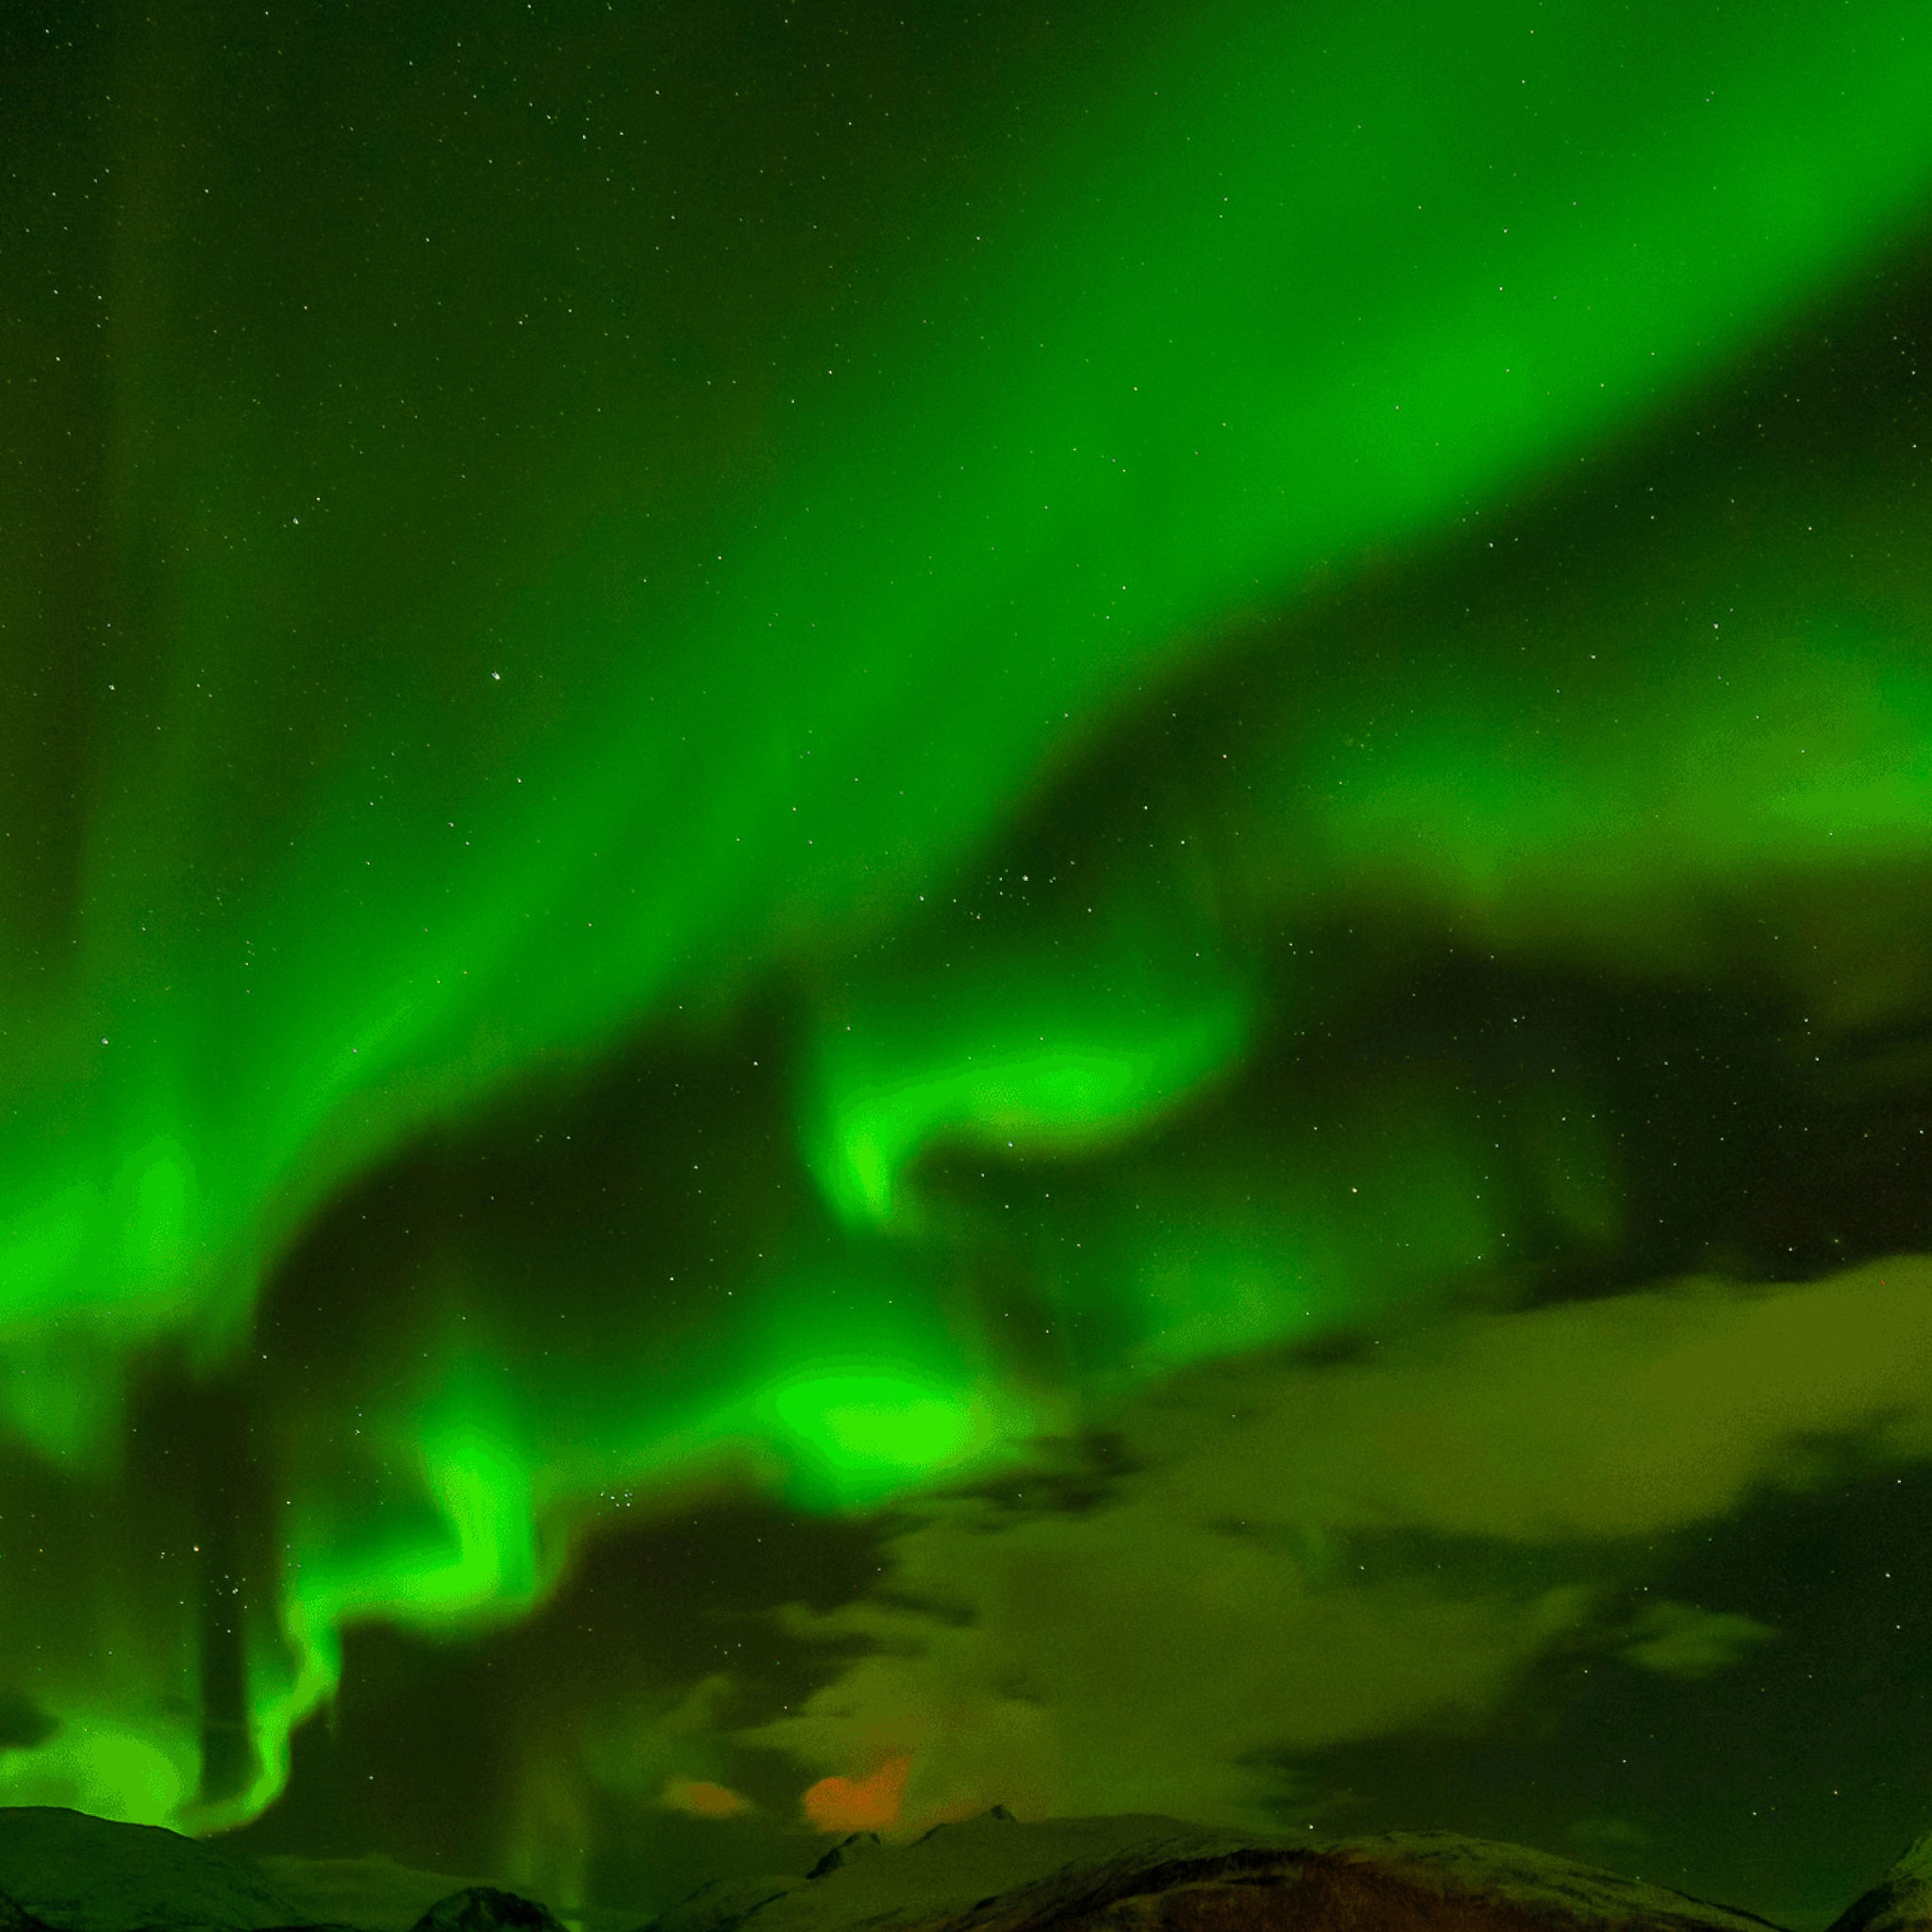 Green aurora borealis, often called the Northern Lights